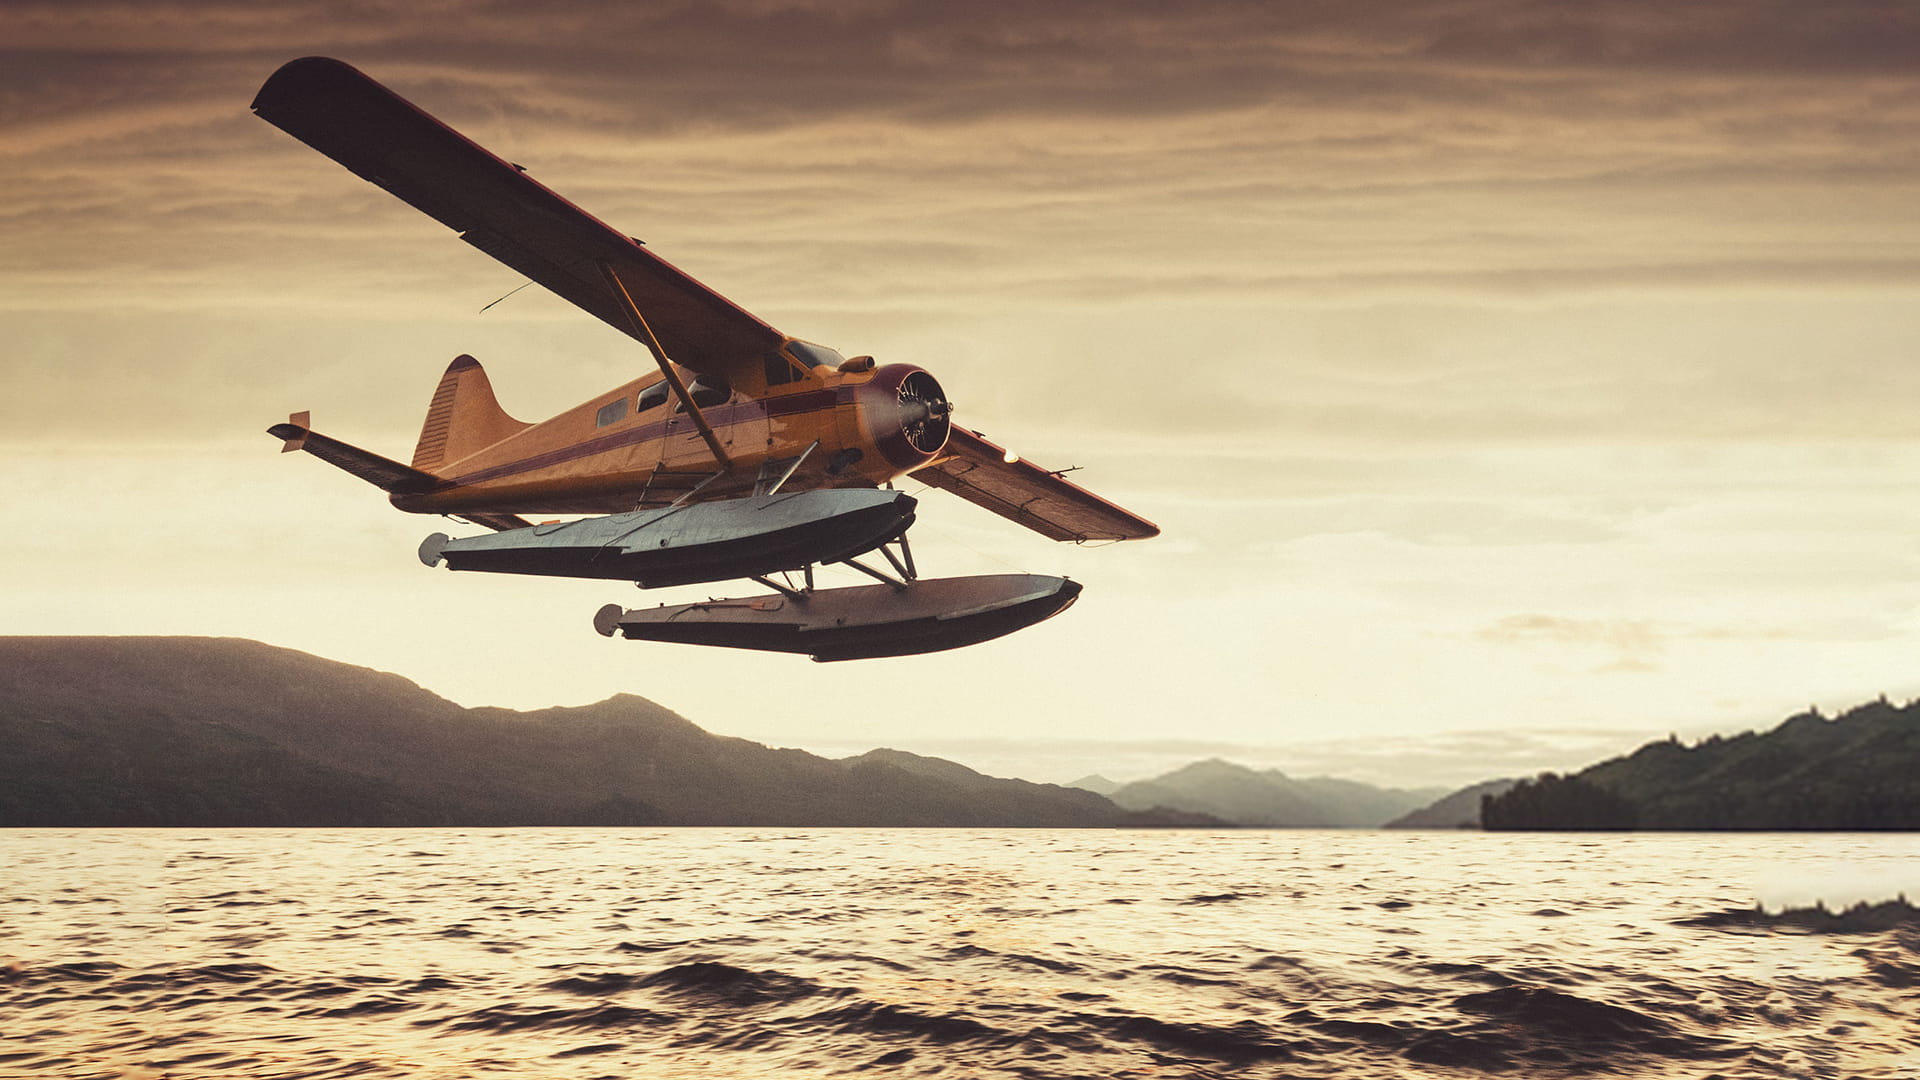 seaplane approaching landing on water